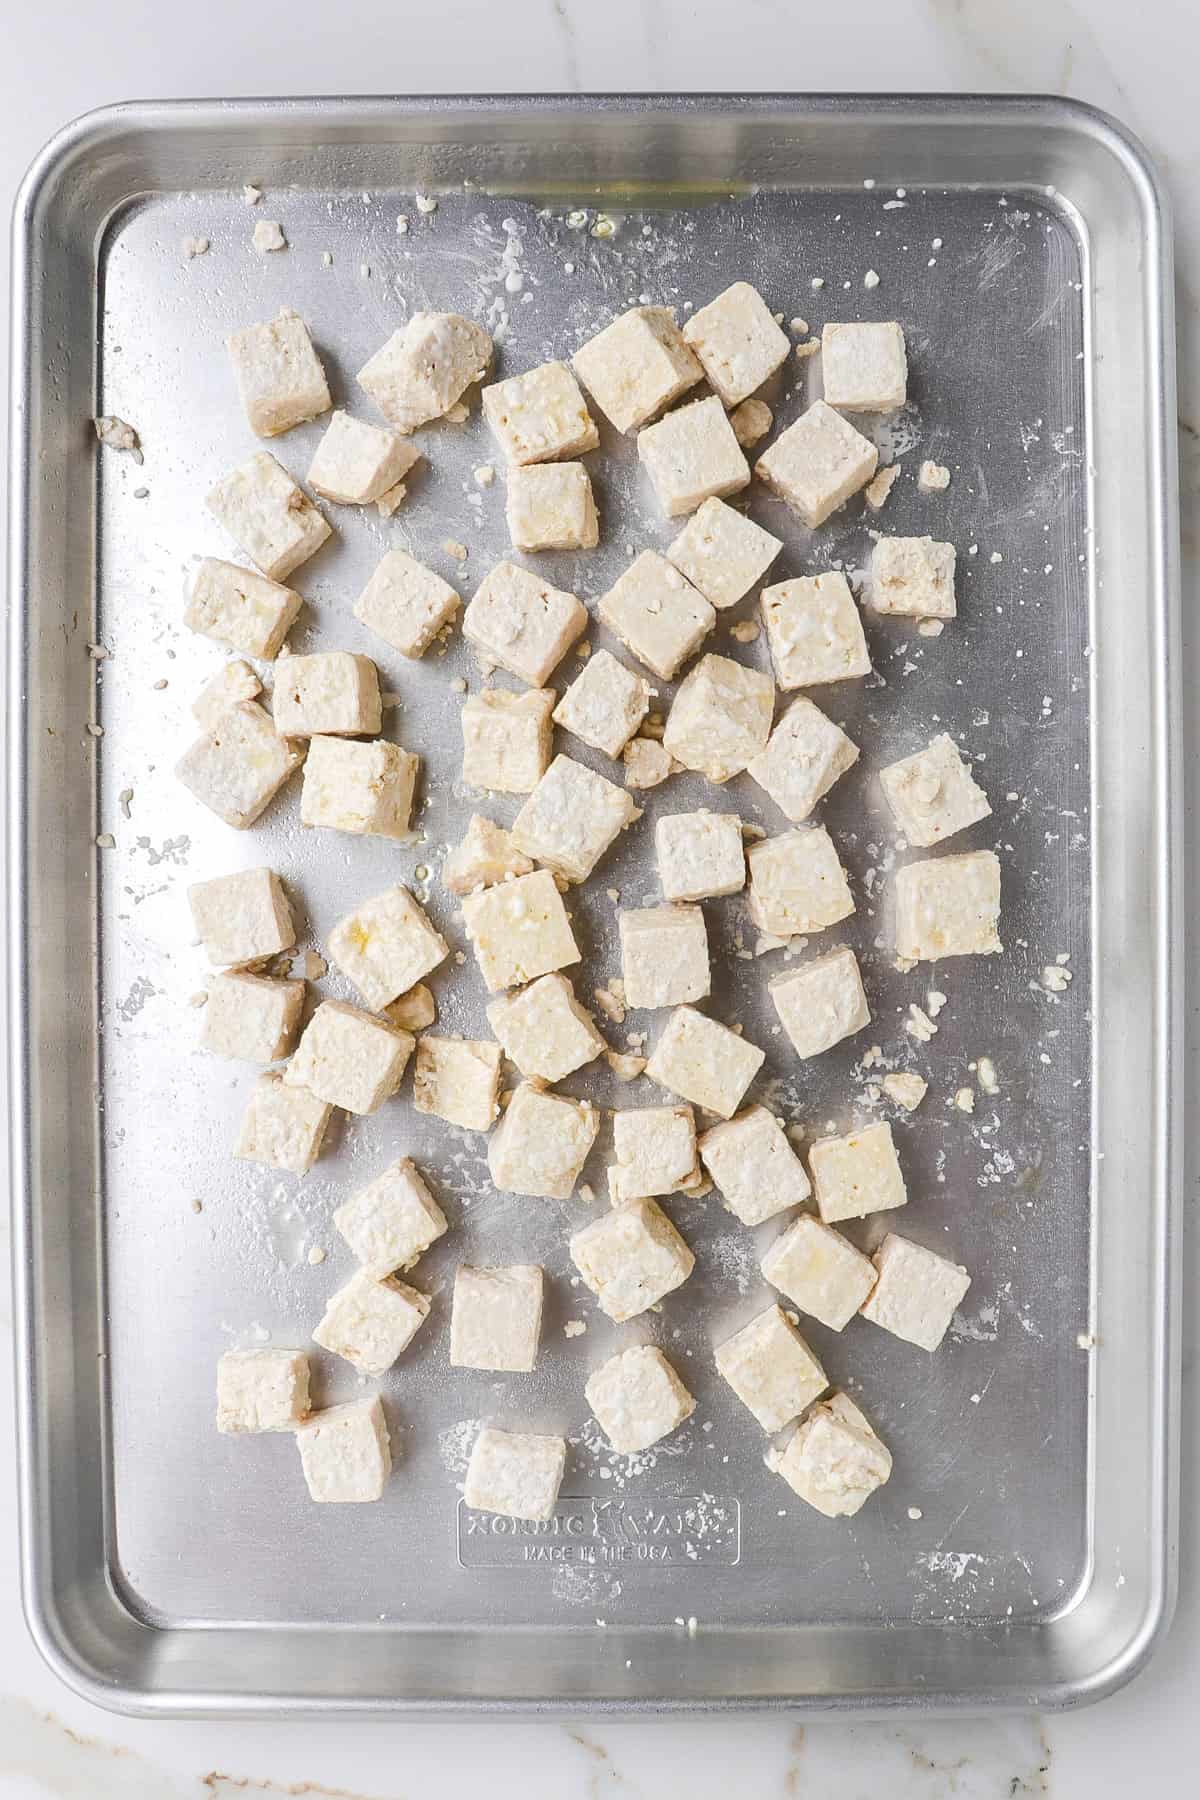 Tofu cubes coated in tapioca flour on baking tray.